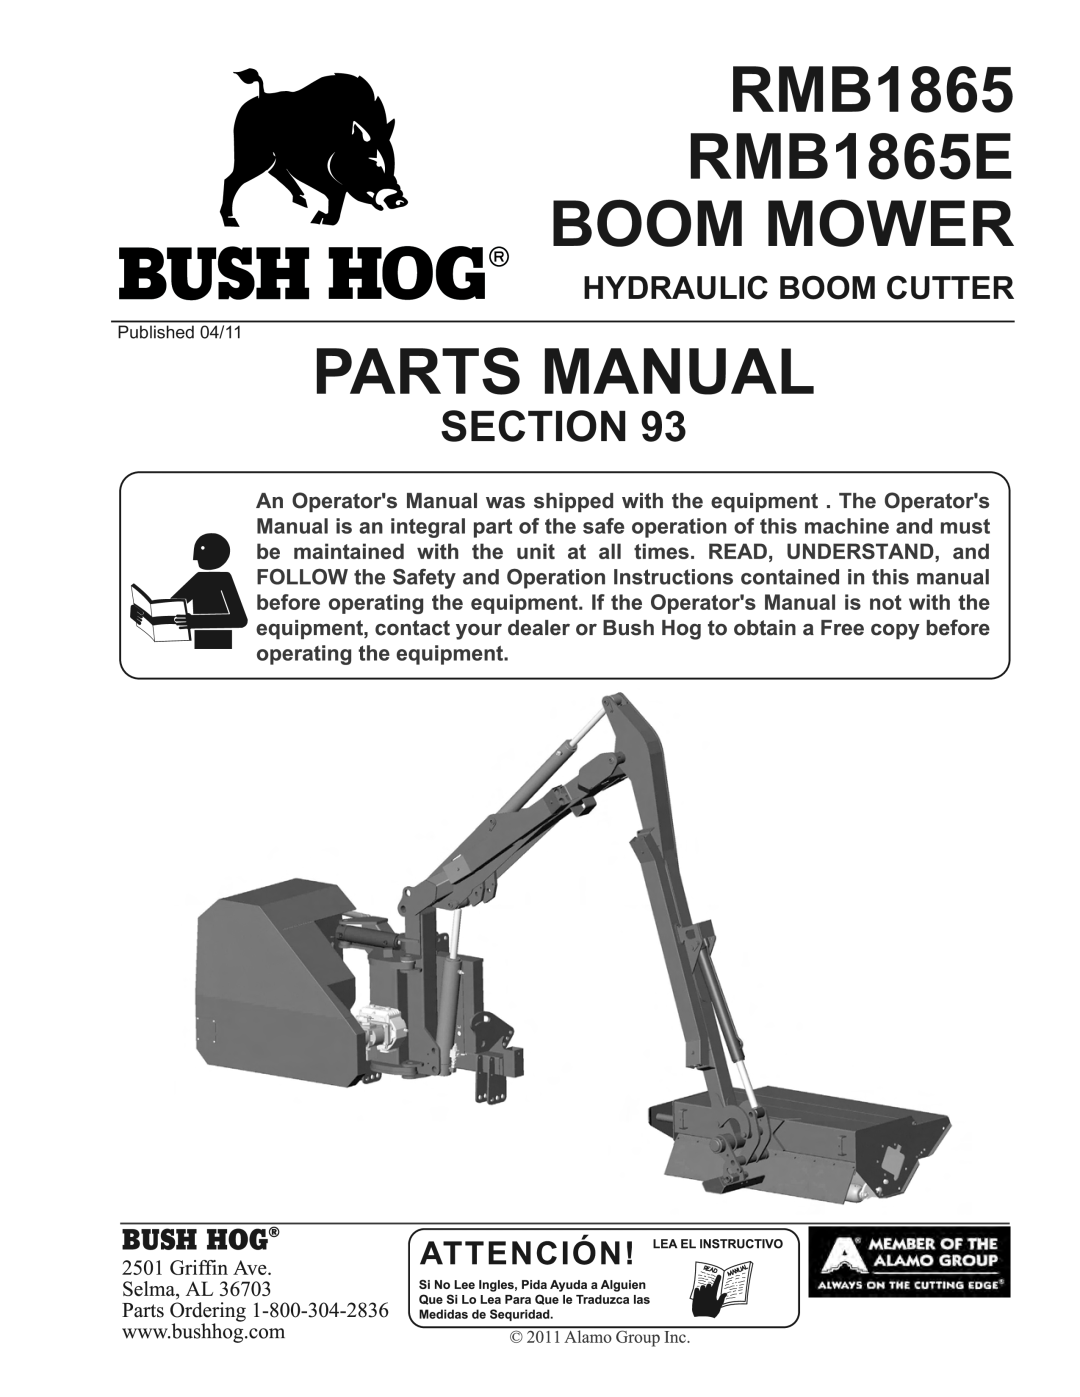 Bush Hog manual Hydraulic Boom Cutter, RMB1865 RMB1865E BOOM MOWER, Parts Manual, Section, Published 04/11 